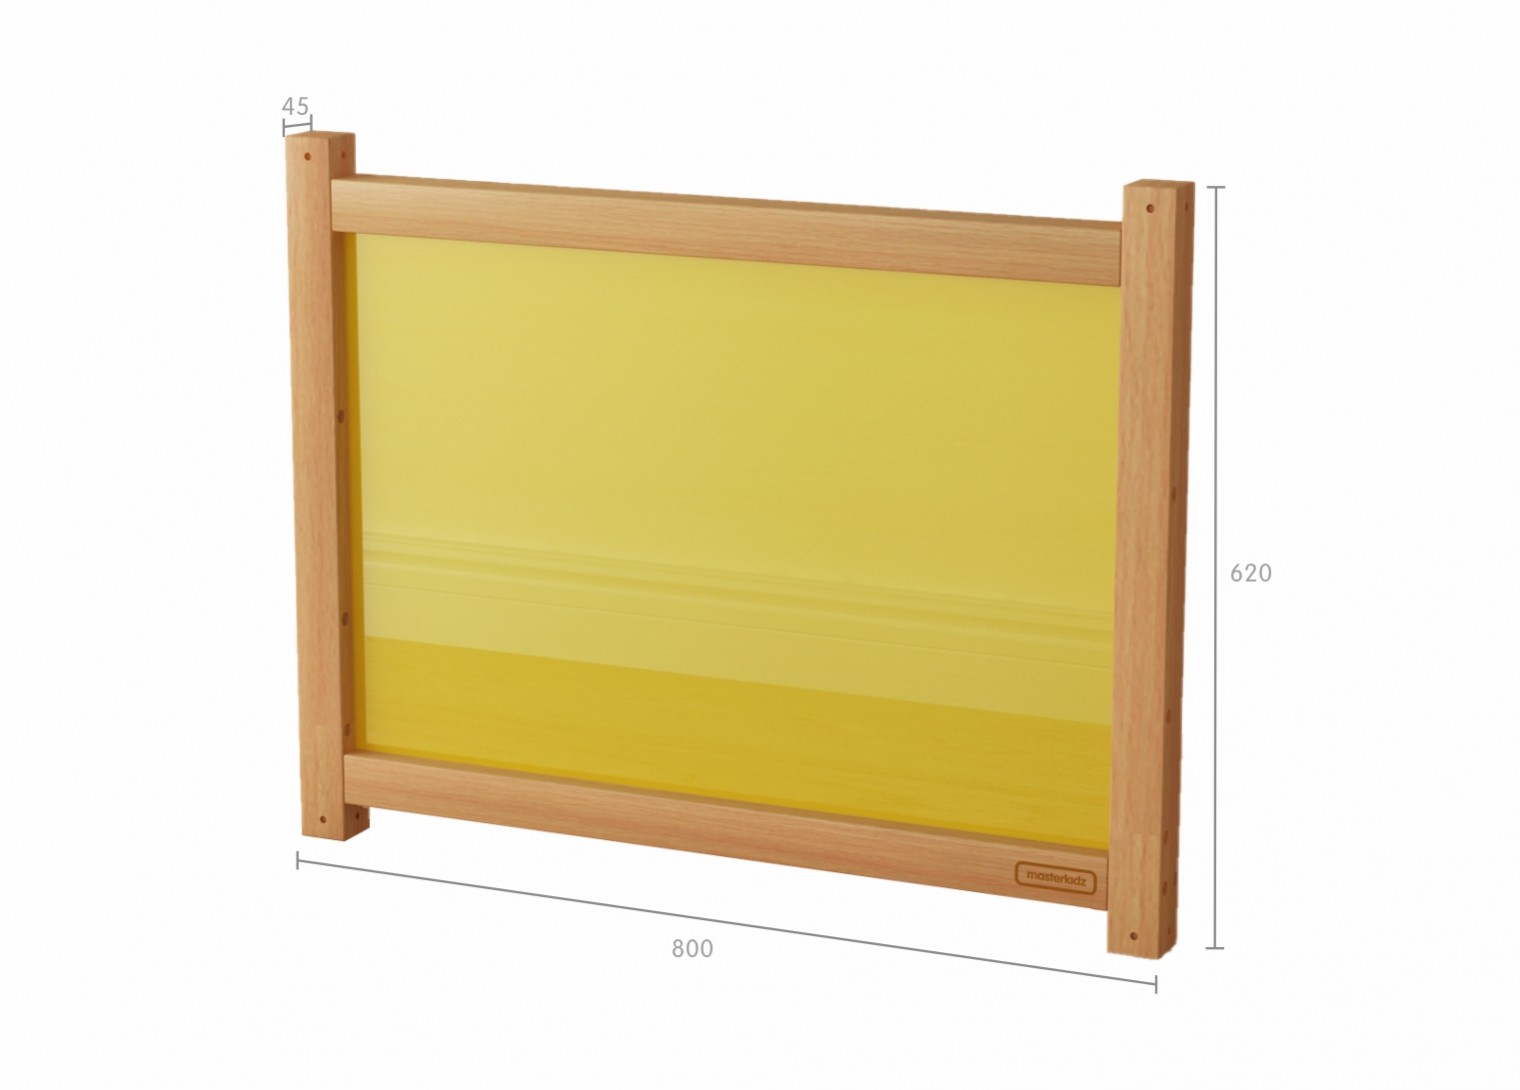 620H x 800L Divider Panel - Translucent Yellow